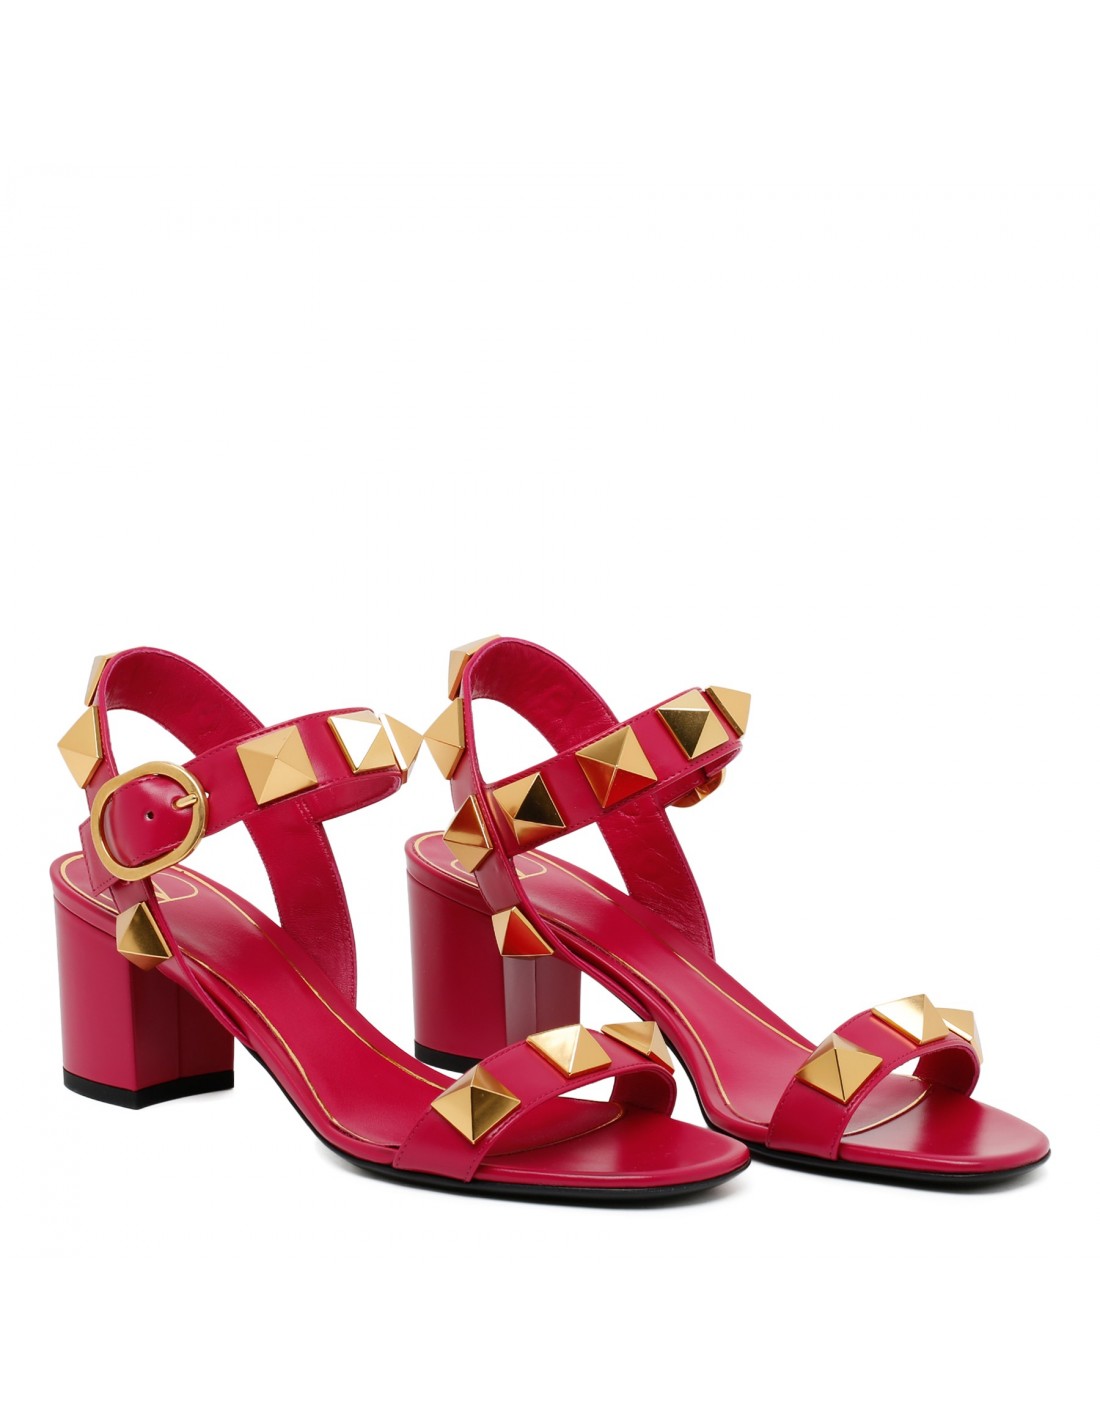 Roman stud strawberry pink leather sandals